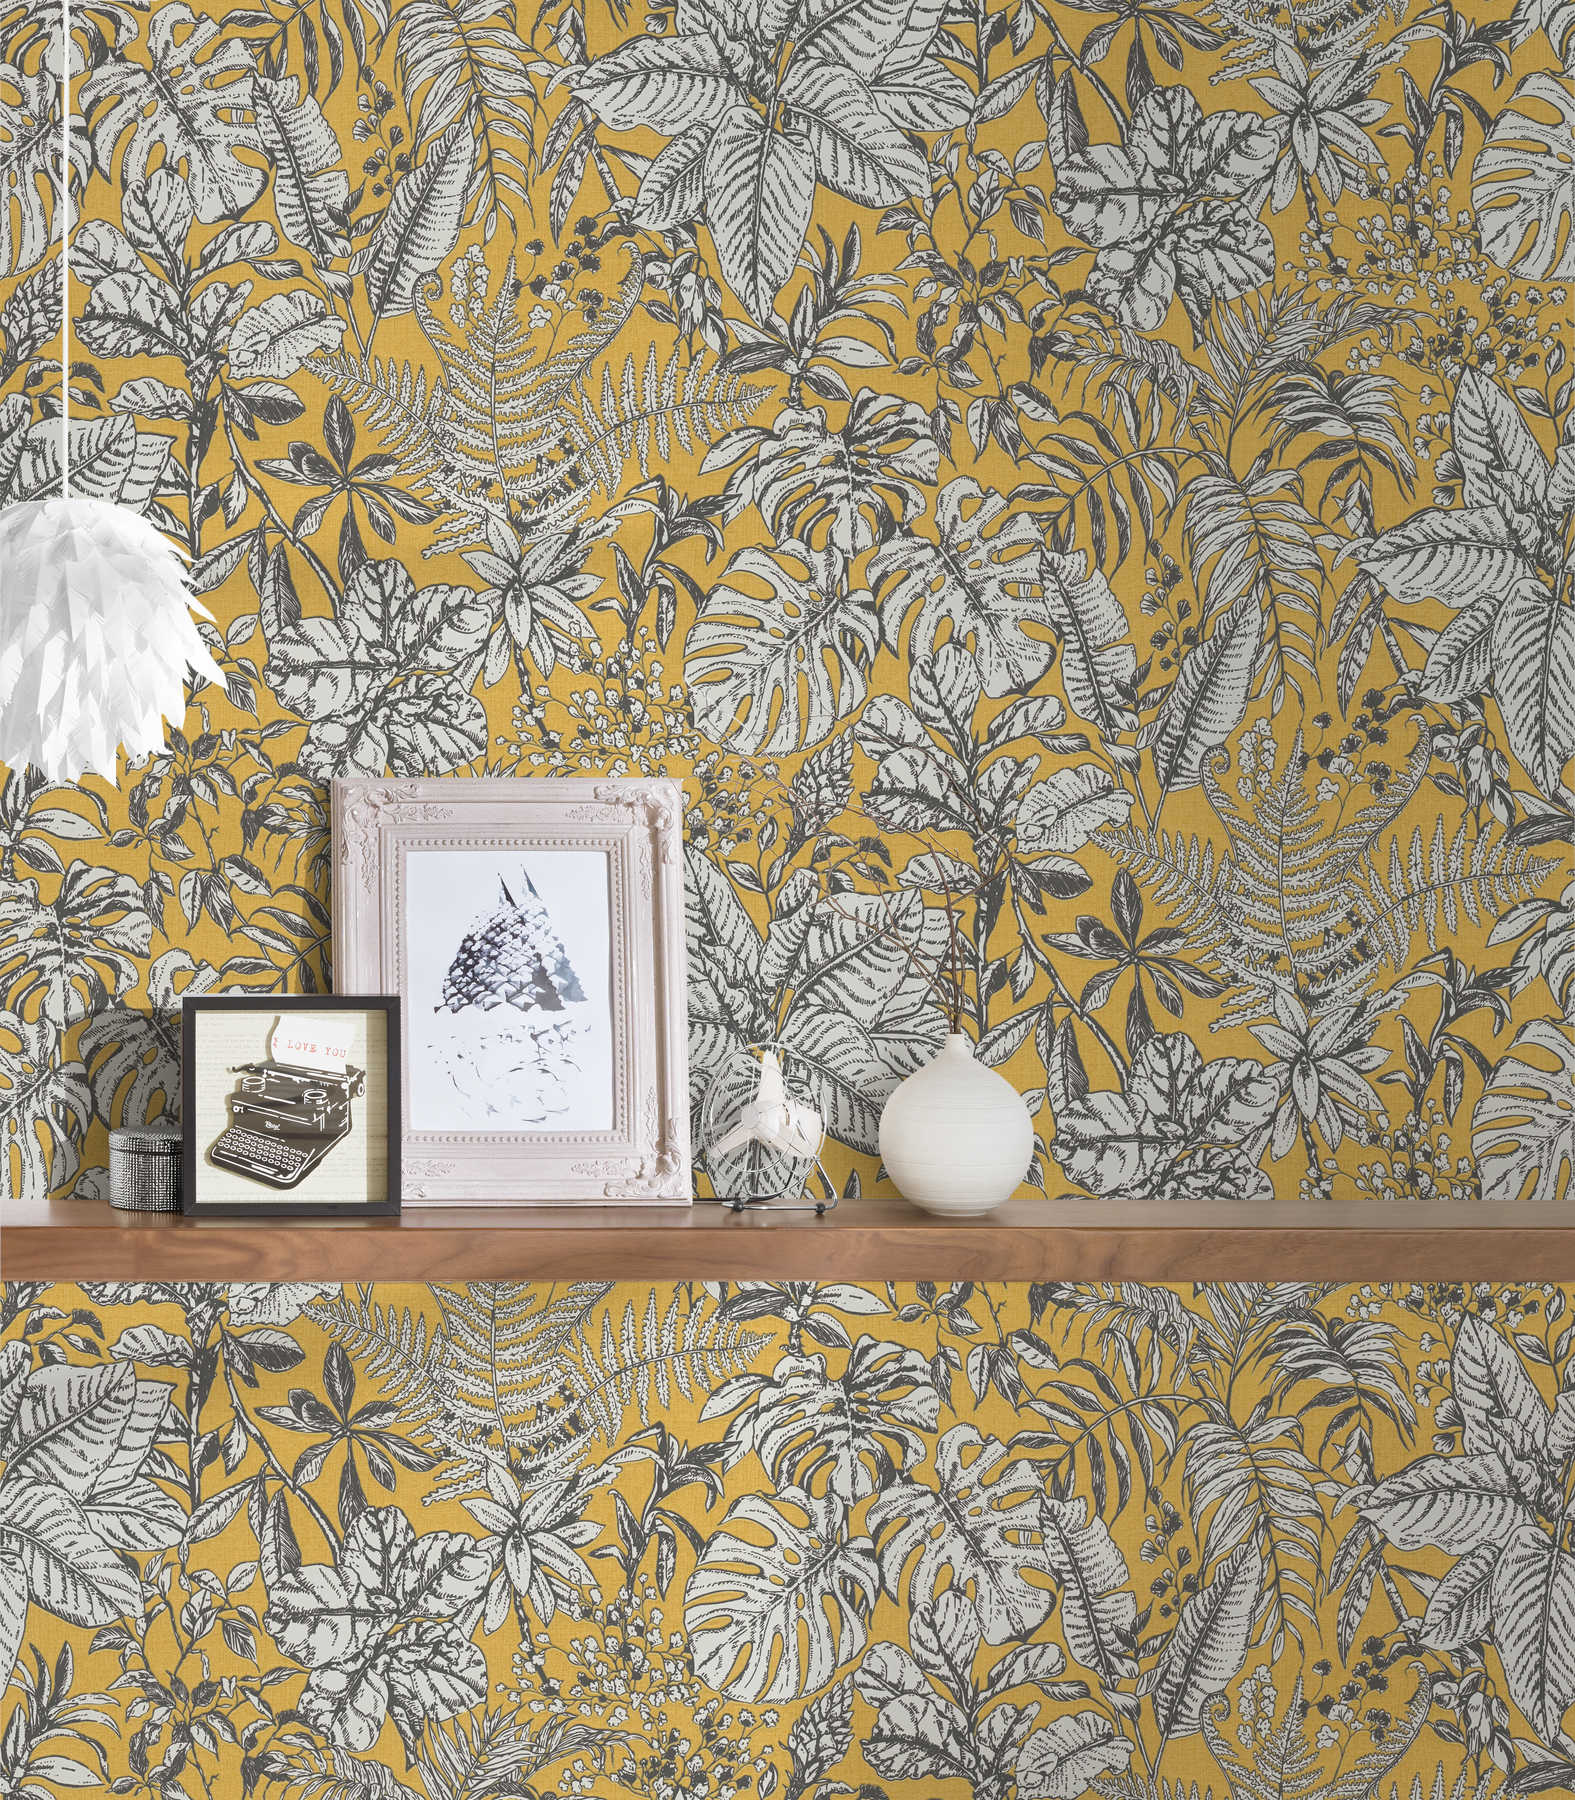             Non-woven wallpaper jungle, monstera leaves & ferns - yellow, white, grey
        